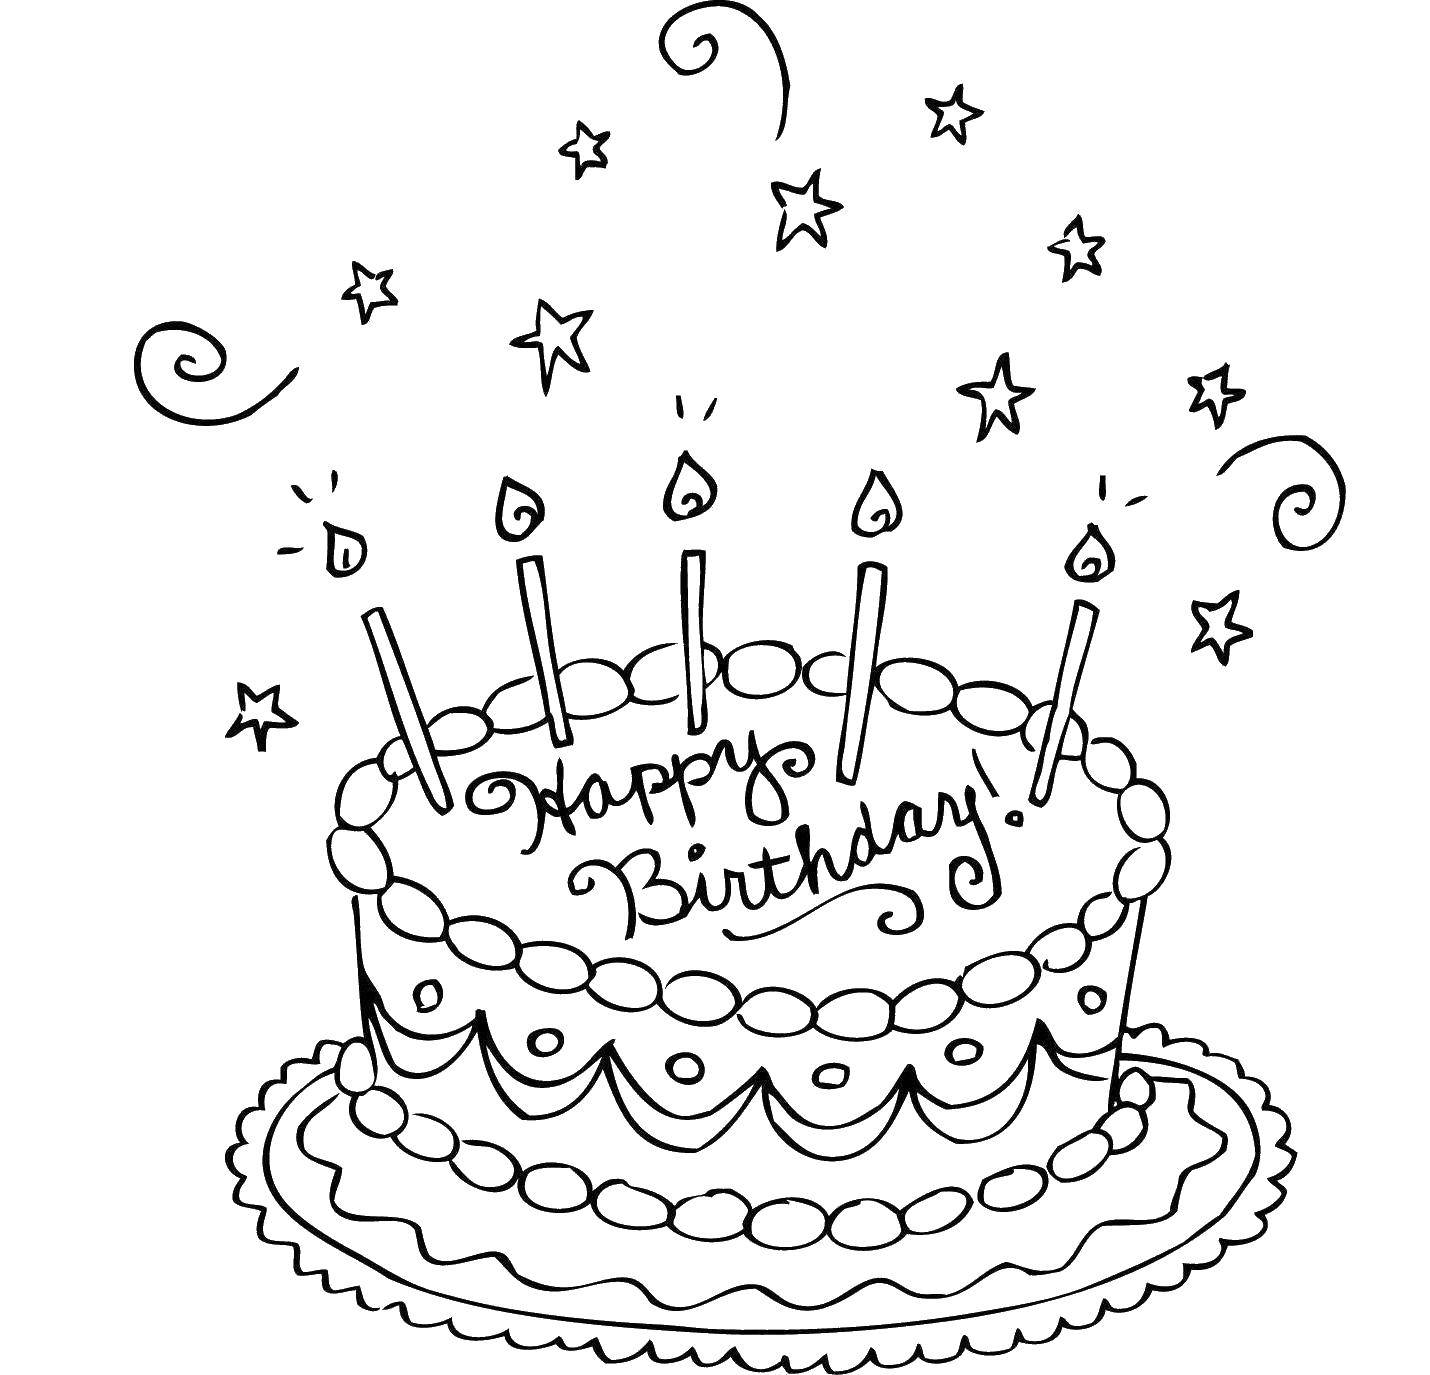 Coloring Birthday cake. Category cakes. Tags:  cakes, celebration, birthday.